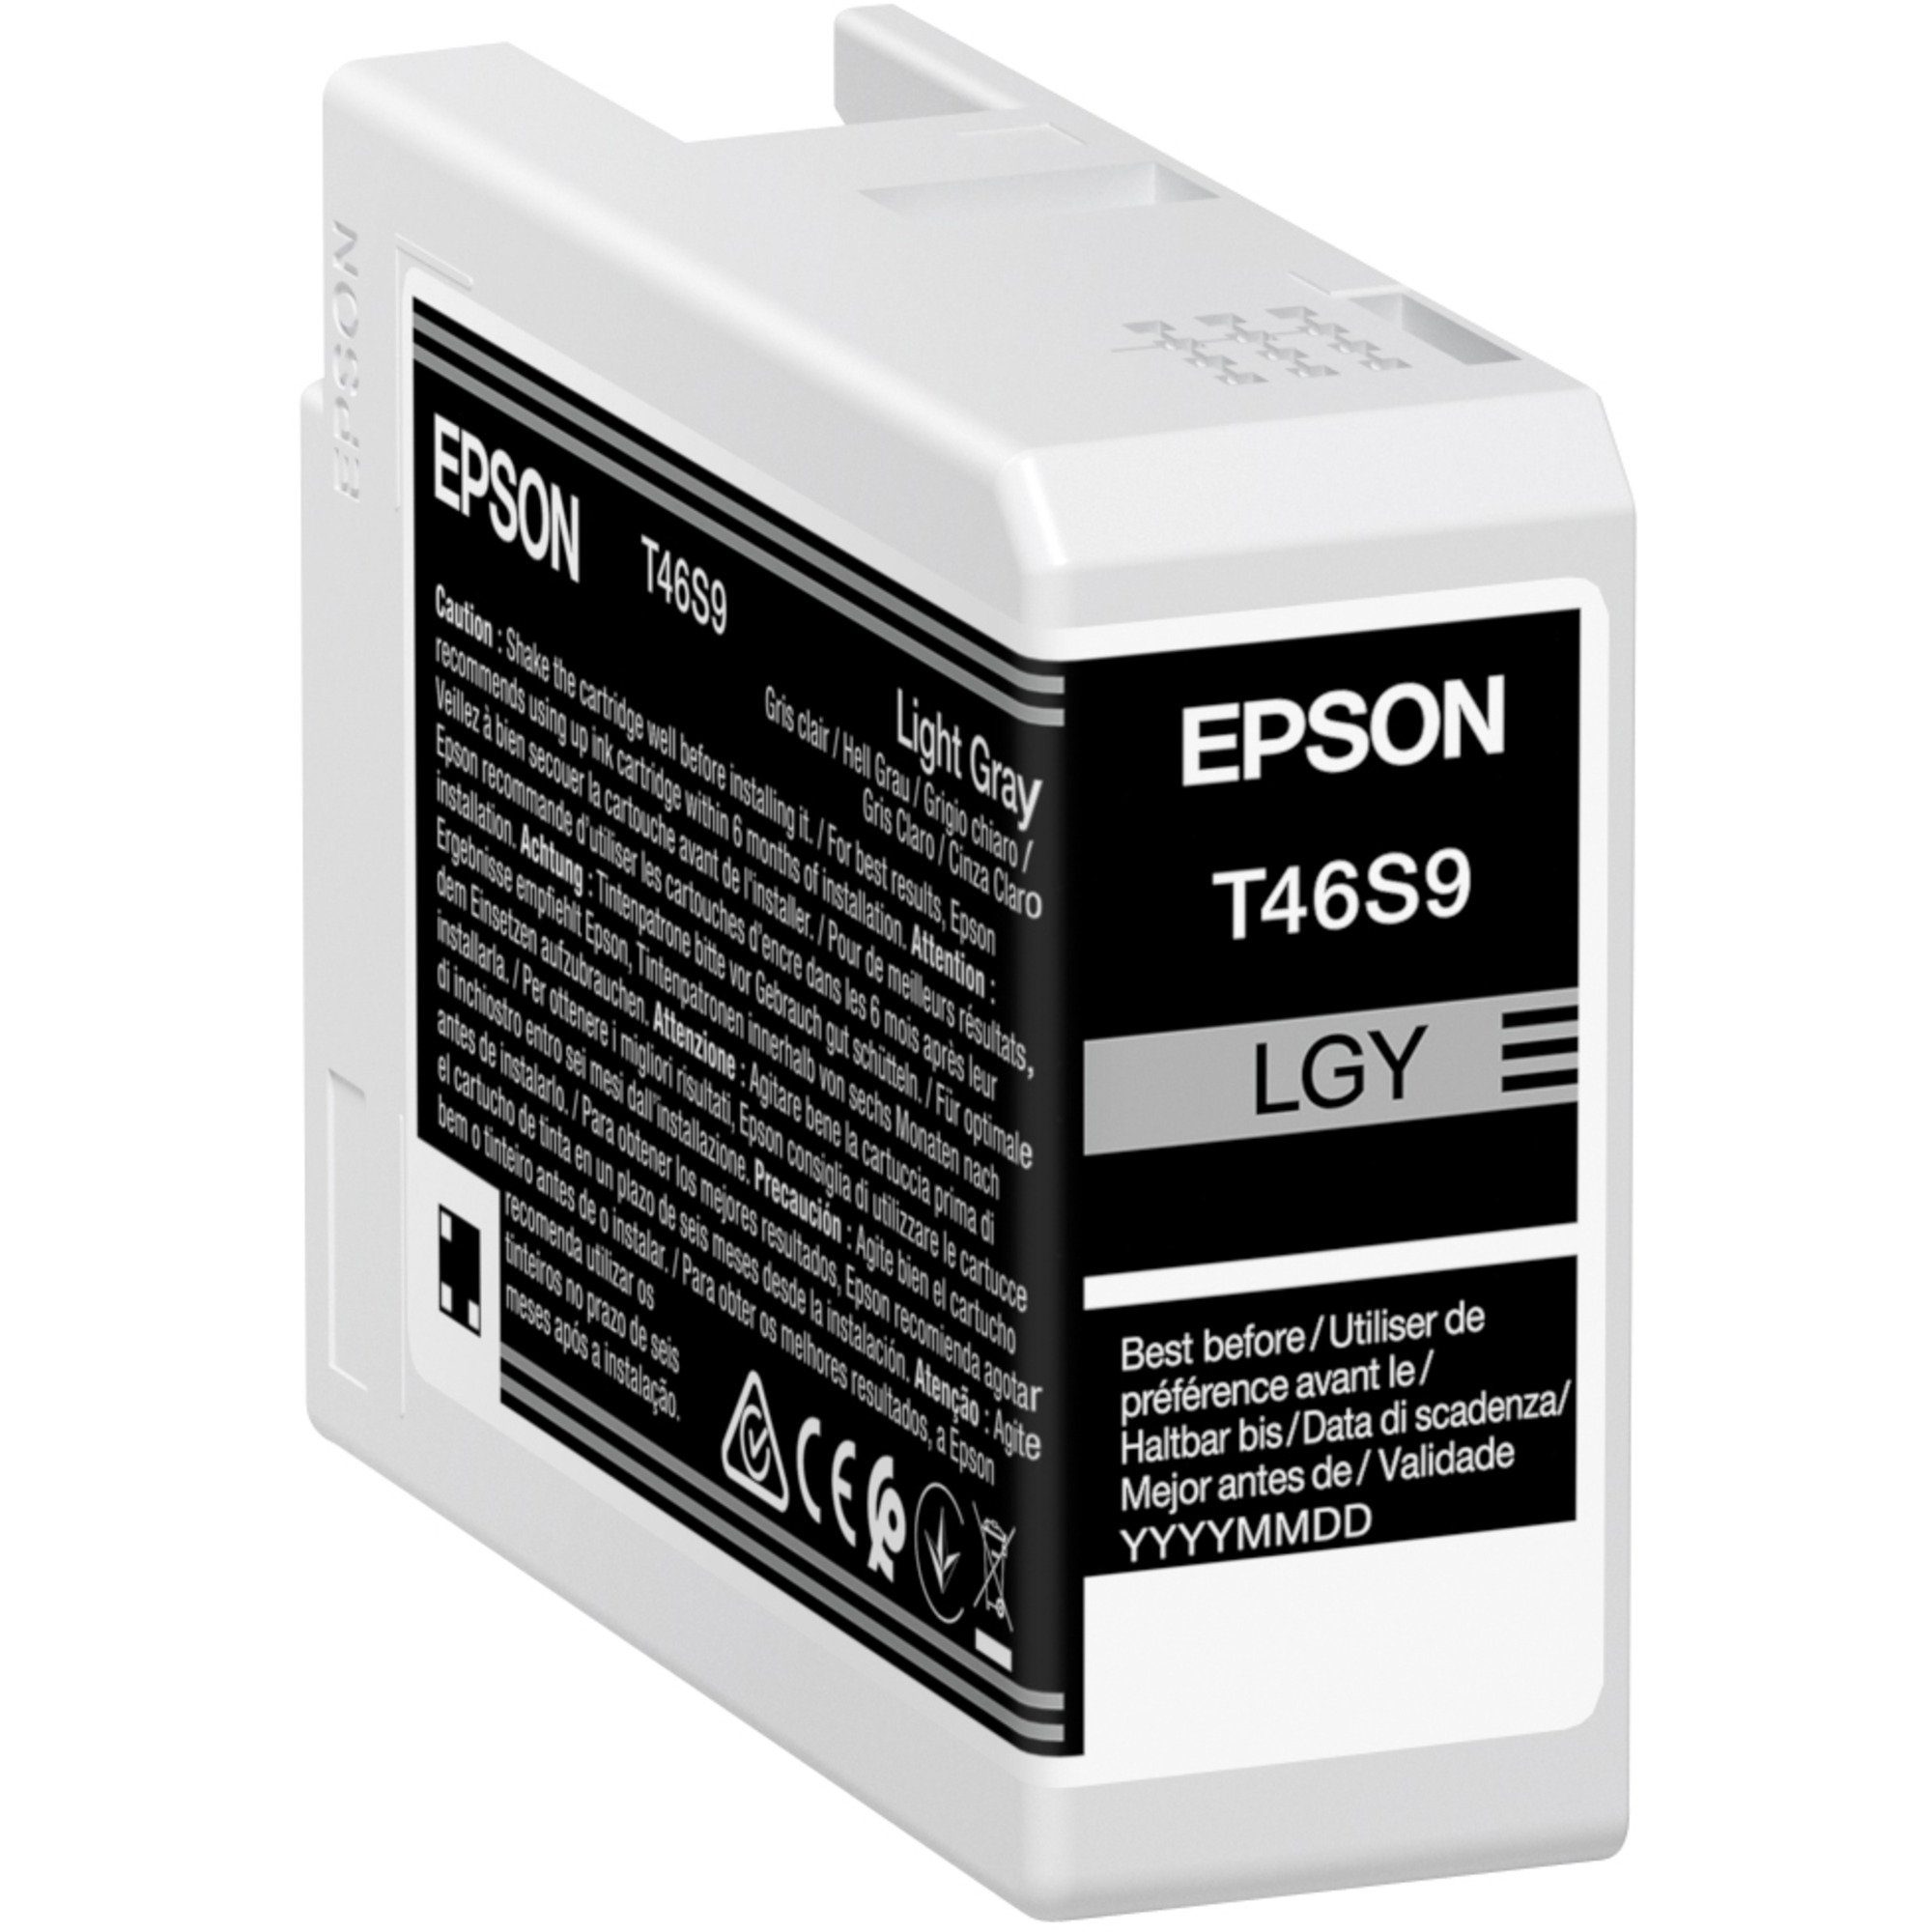 Epson Epson Tinte hellgrau T46S9 (C13T46S900), Tintenpatrone